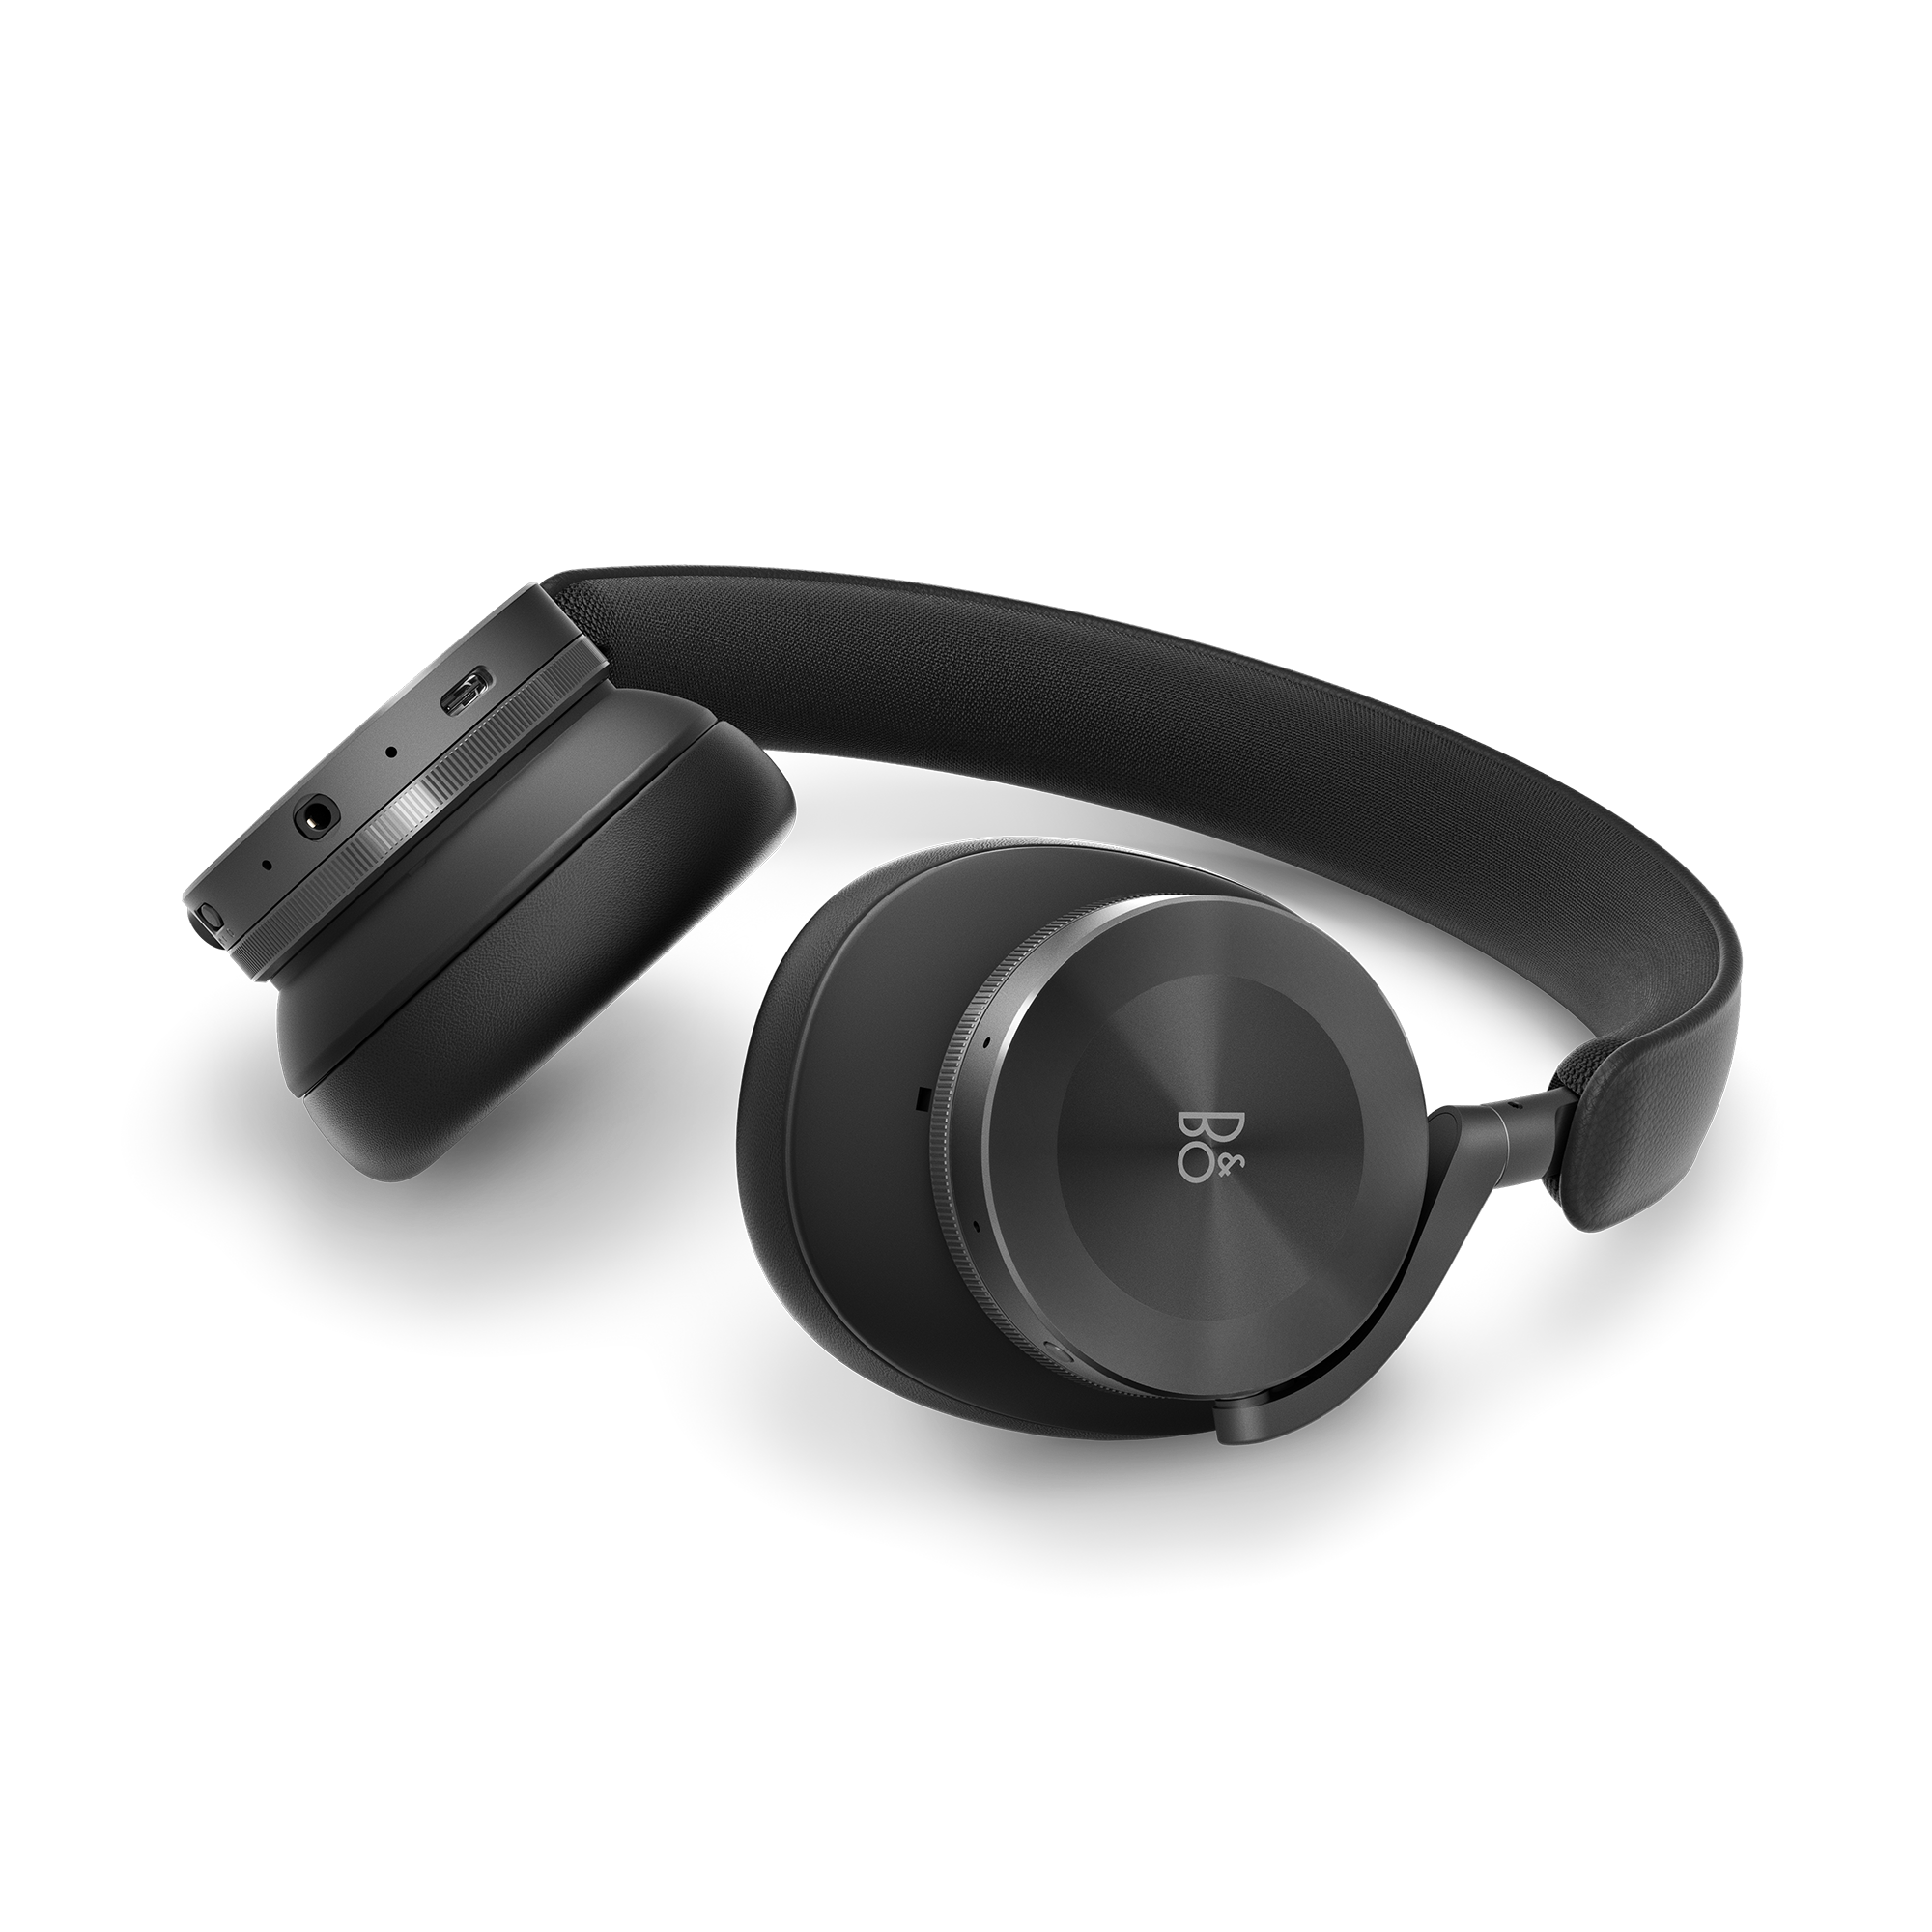 Wireless headphones - Beautiful design, great sound